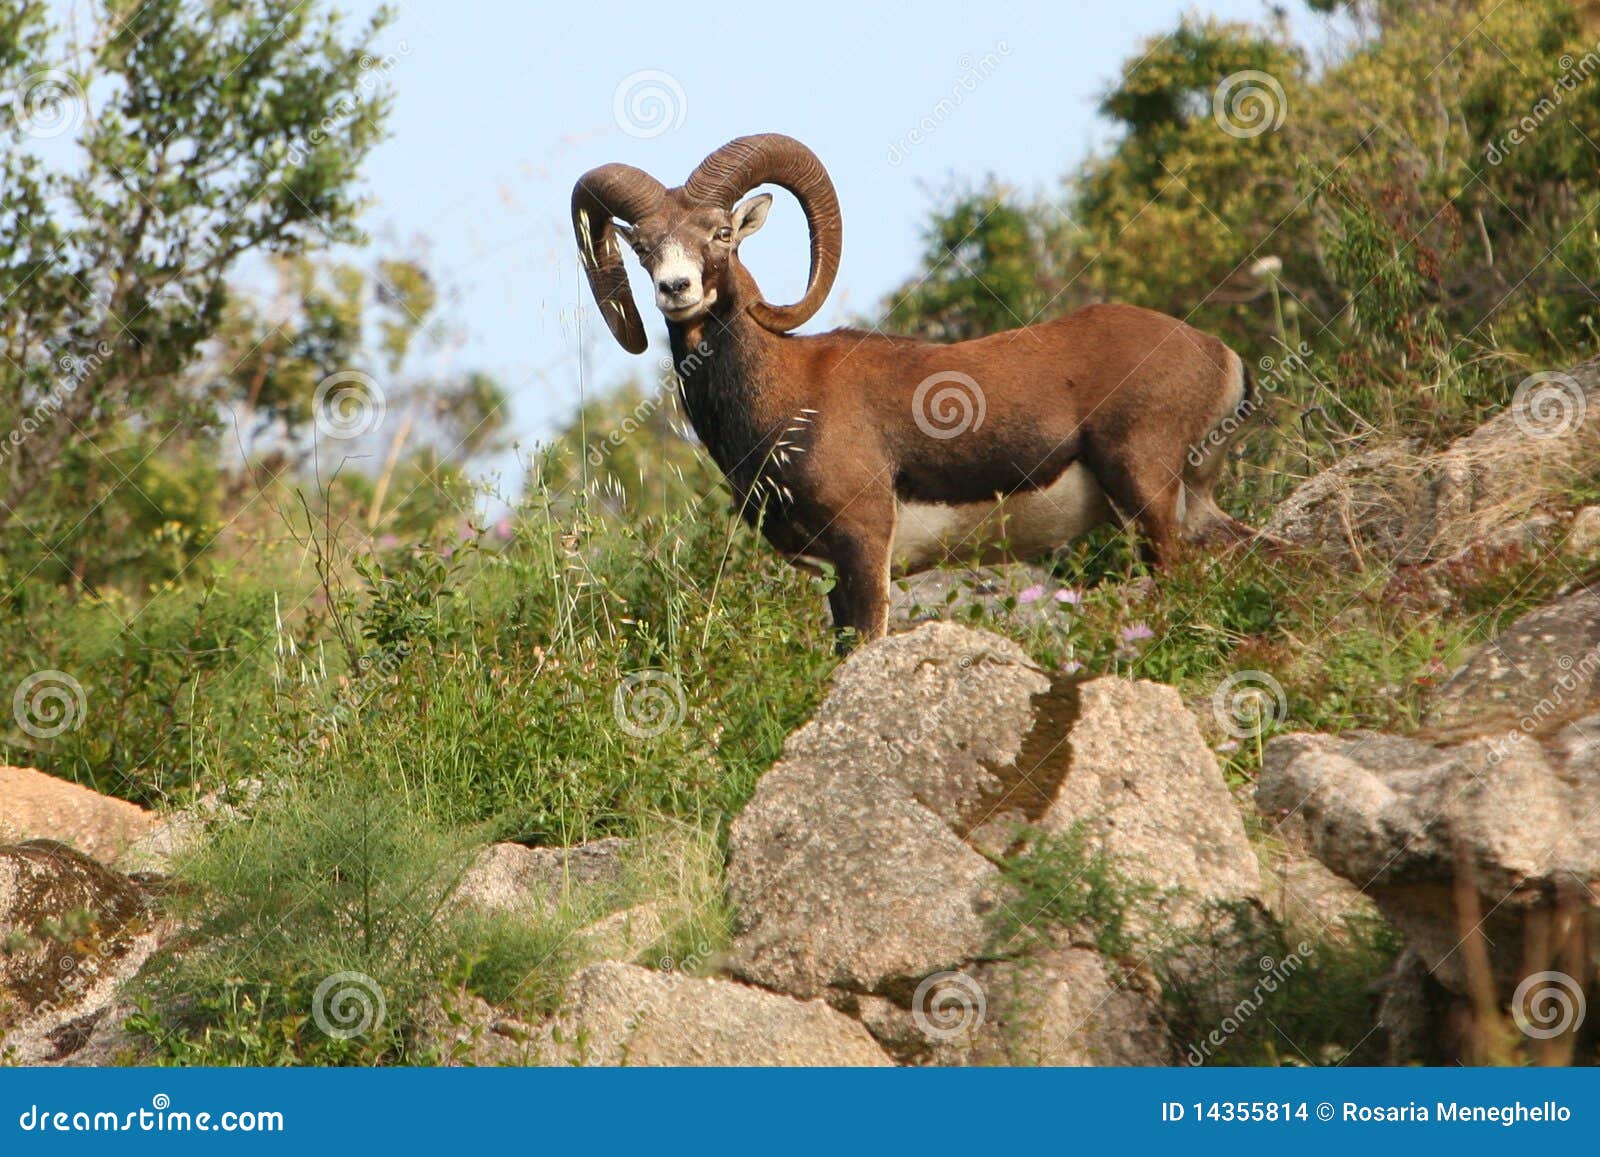 italy sardegna, mouflon of the gallura